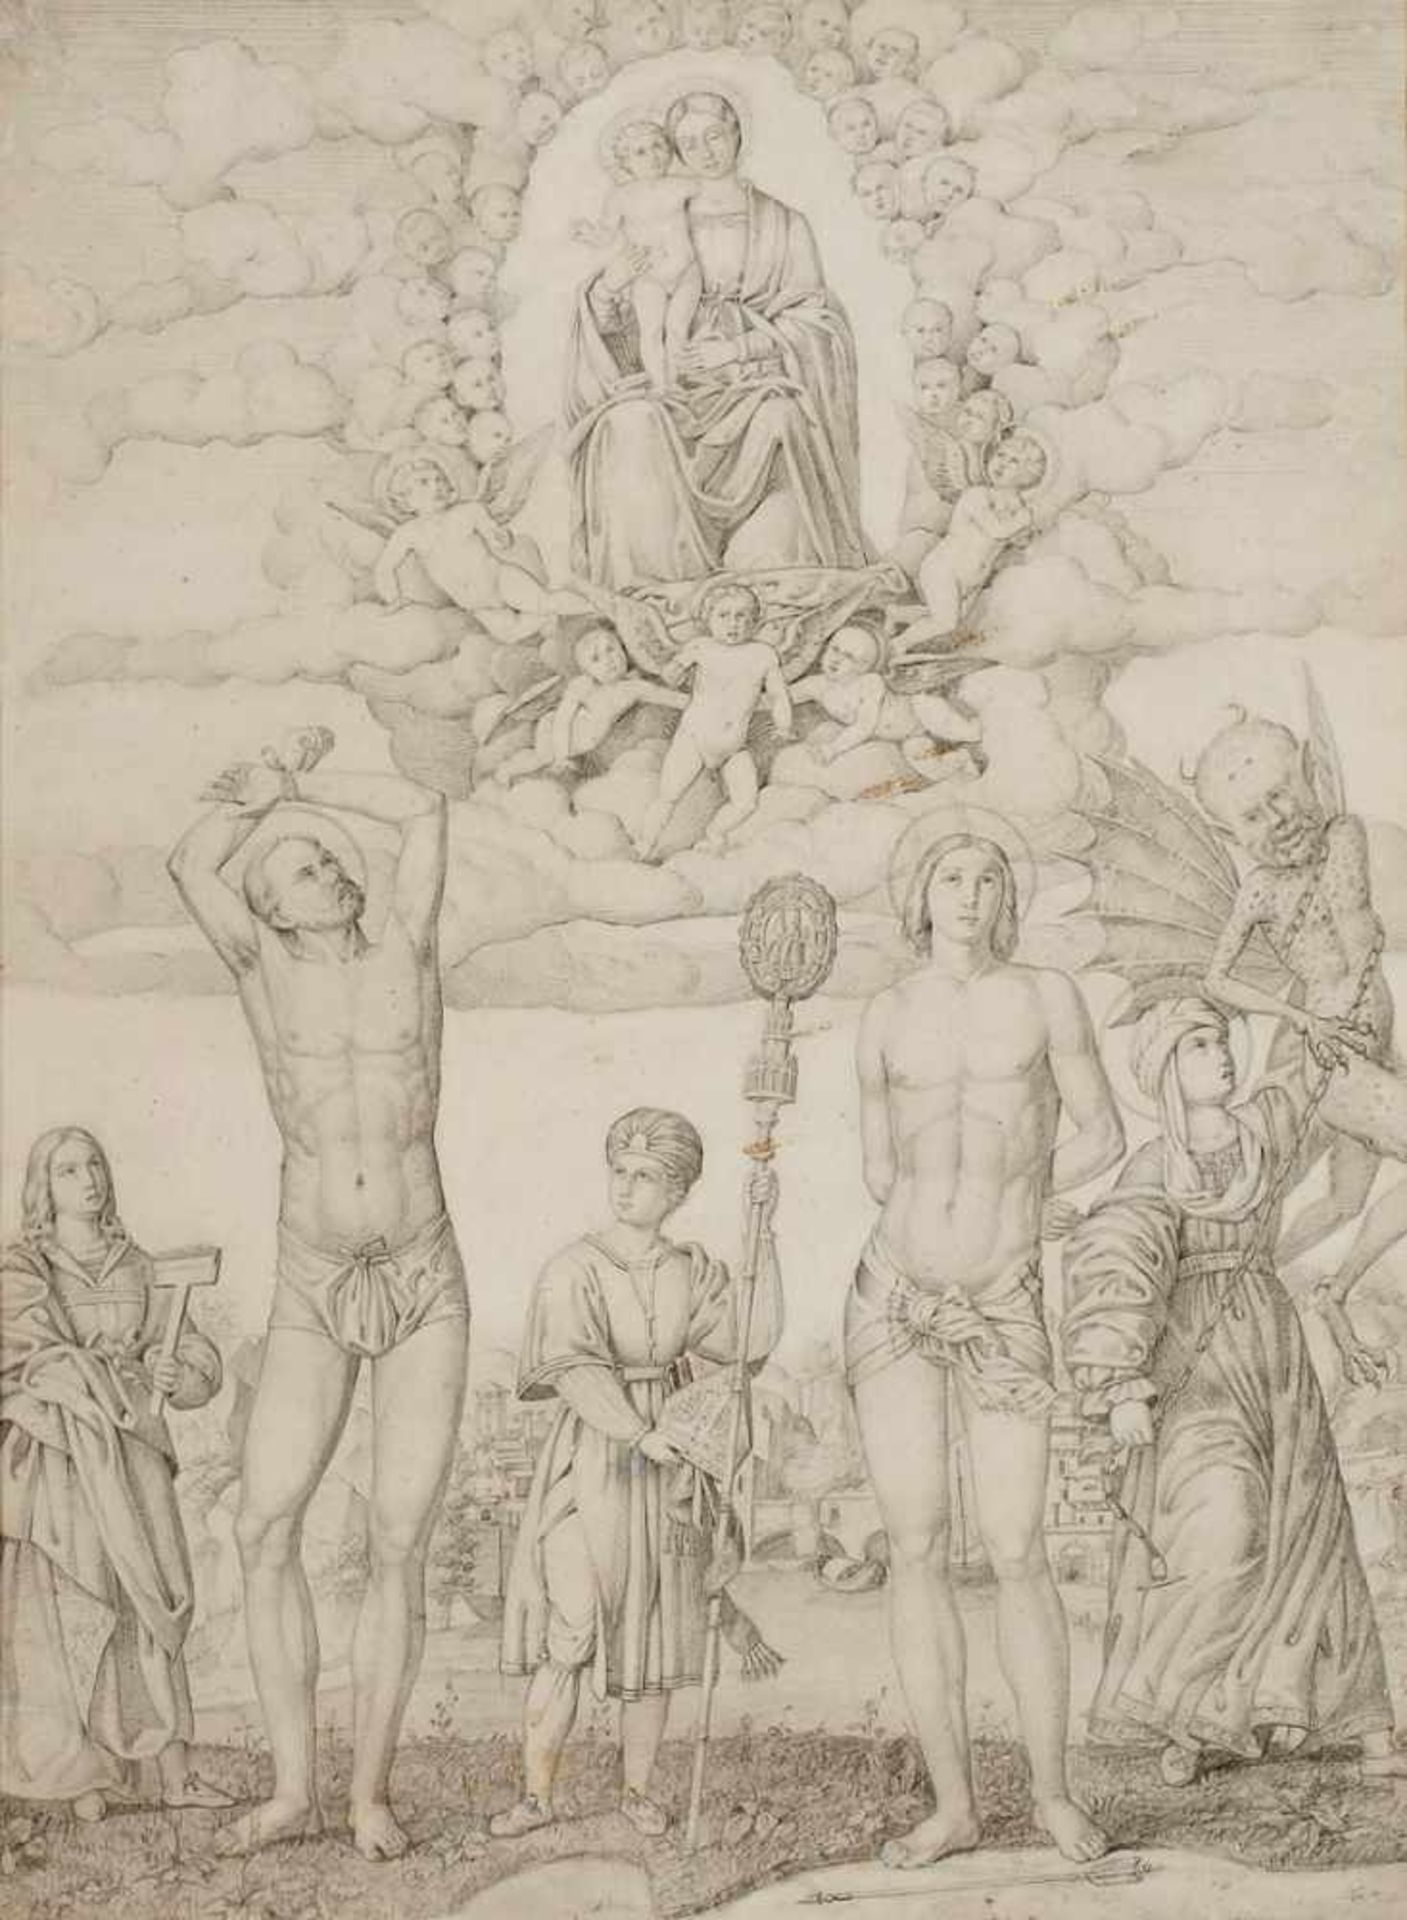 Bleistiftzeichnungnach Francesco Bonsignori ca. 1460 Verona - 1519 Caldiero "E liste in Santi Nazaro